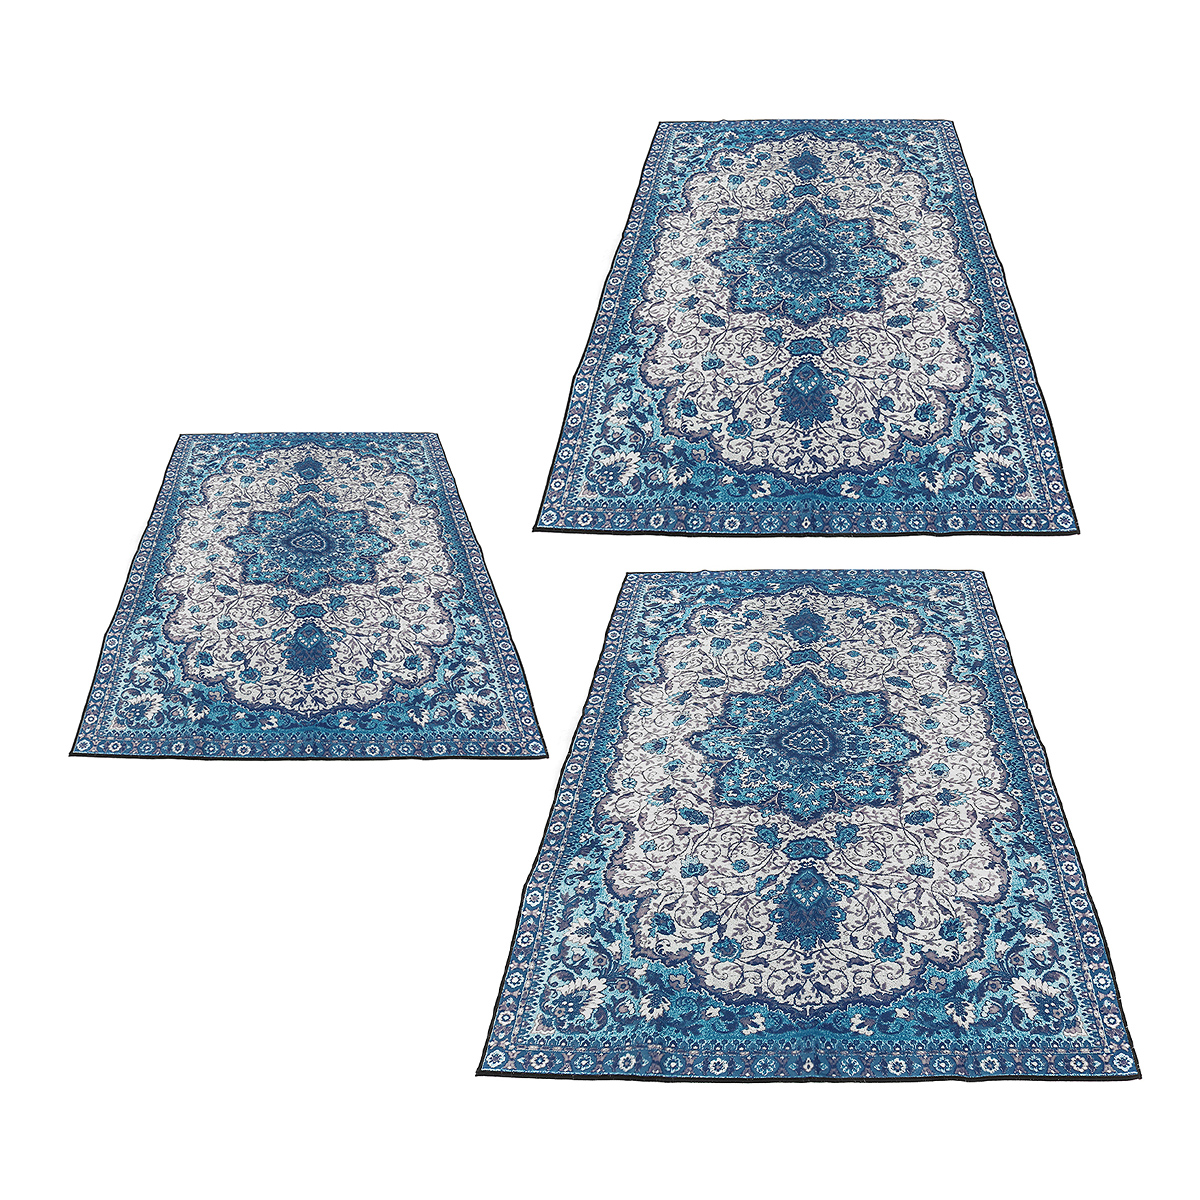 Premium-Large-Floor-Rug-Navy-Blue-Super-Soft-Print-Traditional-Persian-Carpet-1878868-8